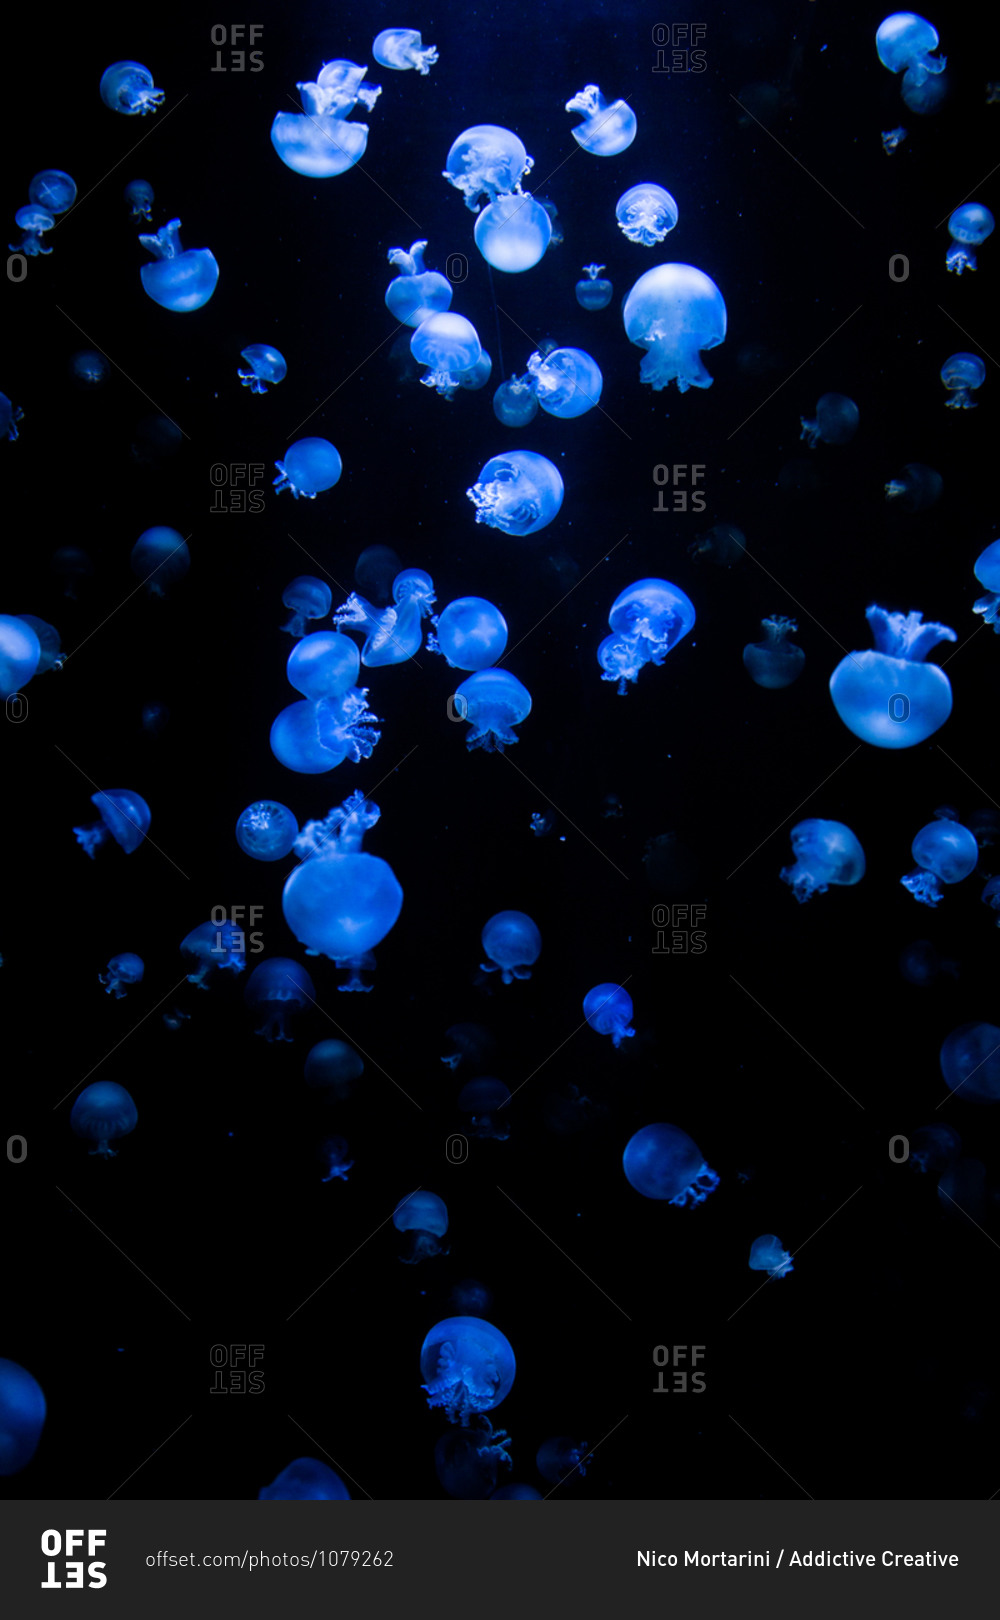 Many bioluminescent jellyfish illuminated by blue light floating in dark water deep in ocean